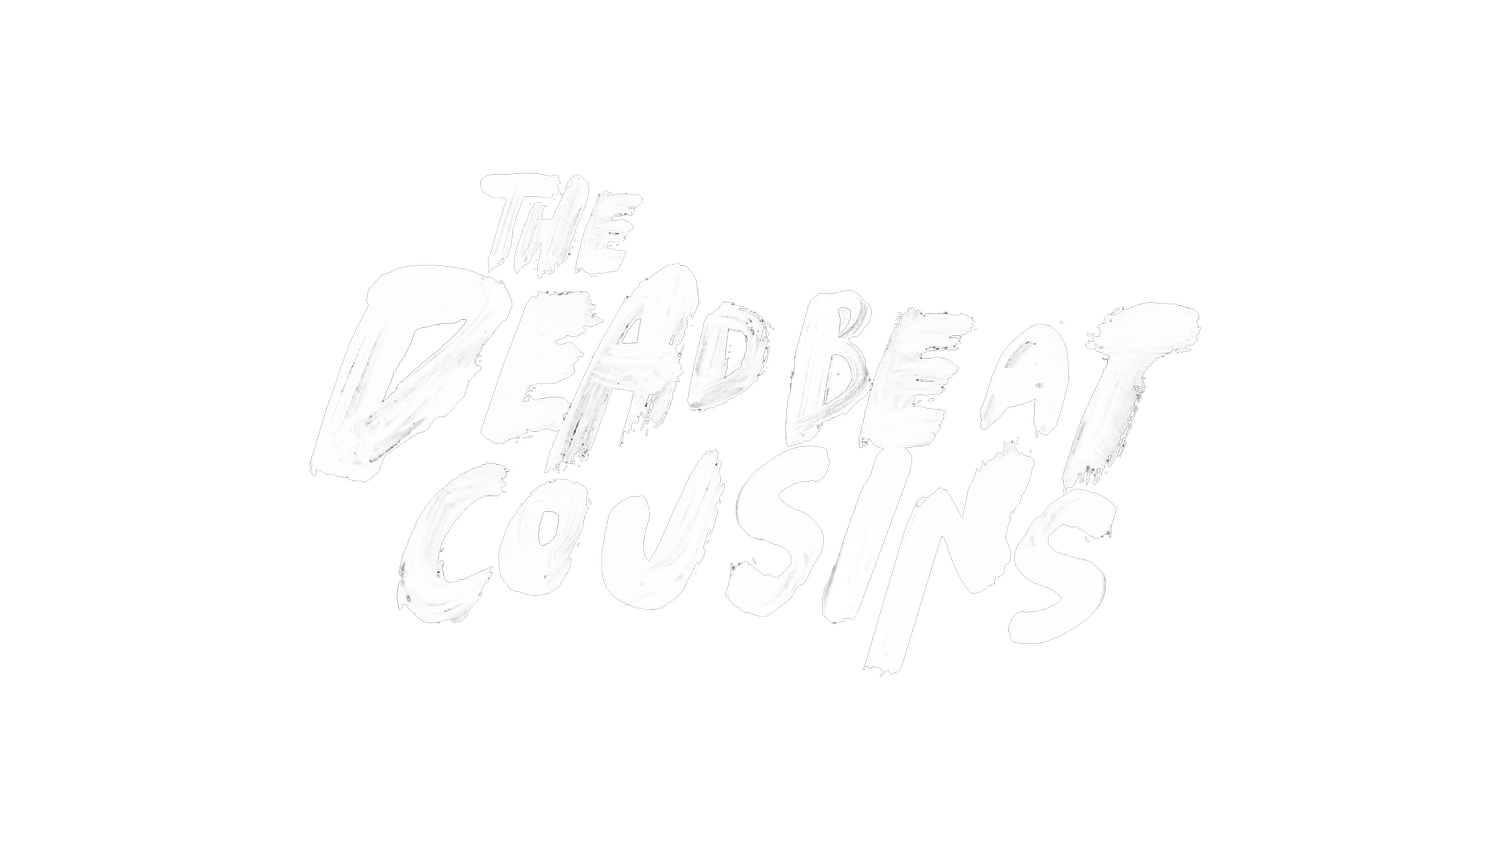 The Deadbeat Cousins